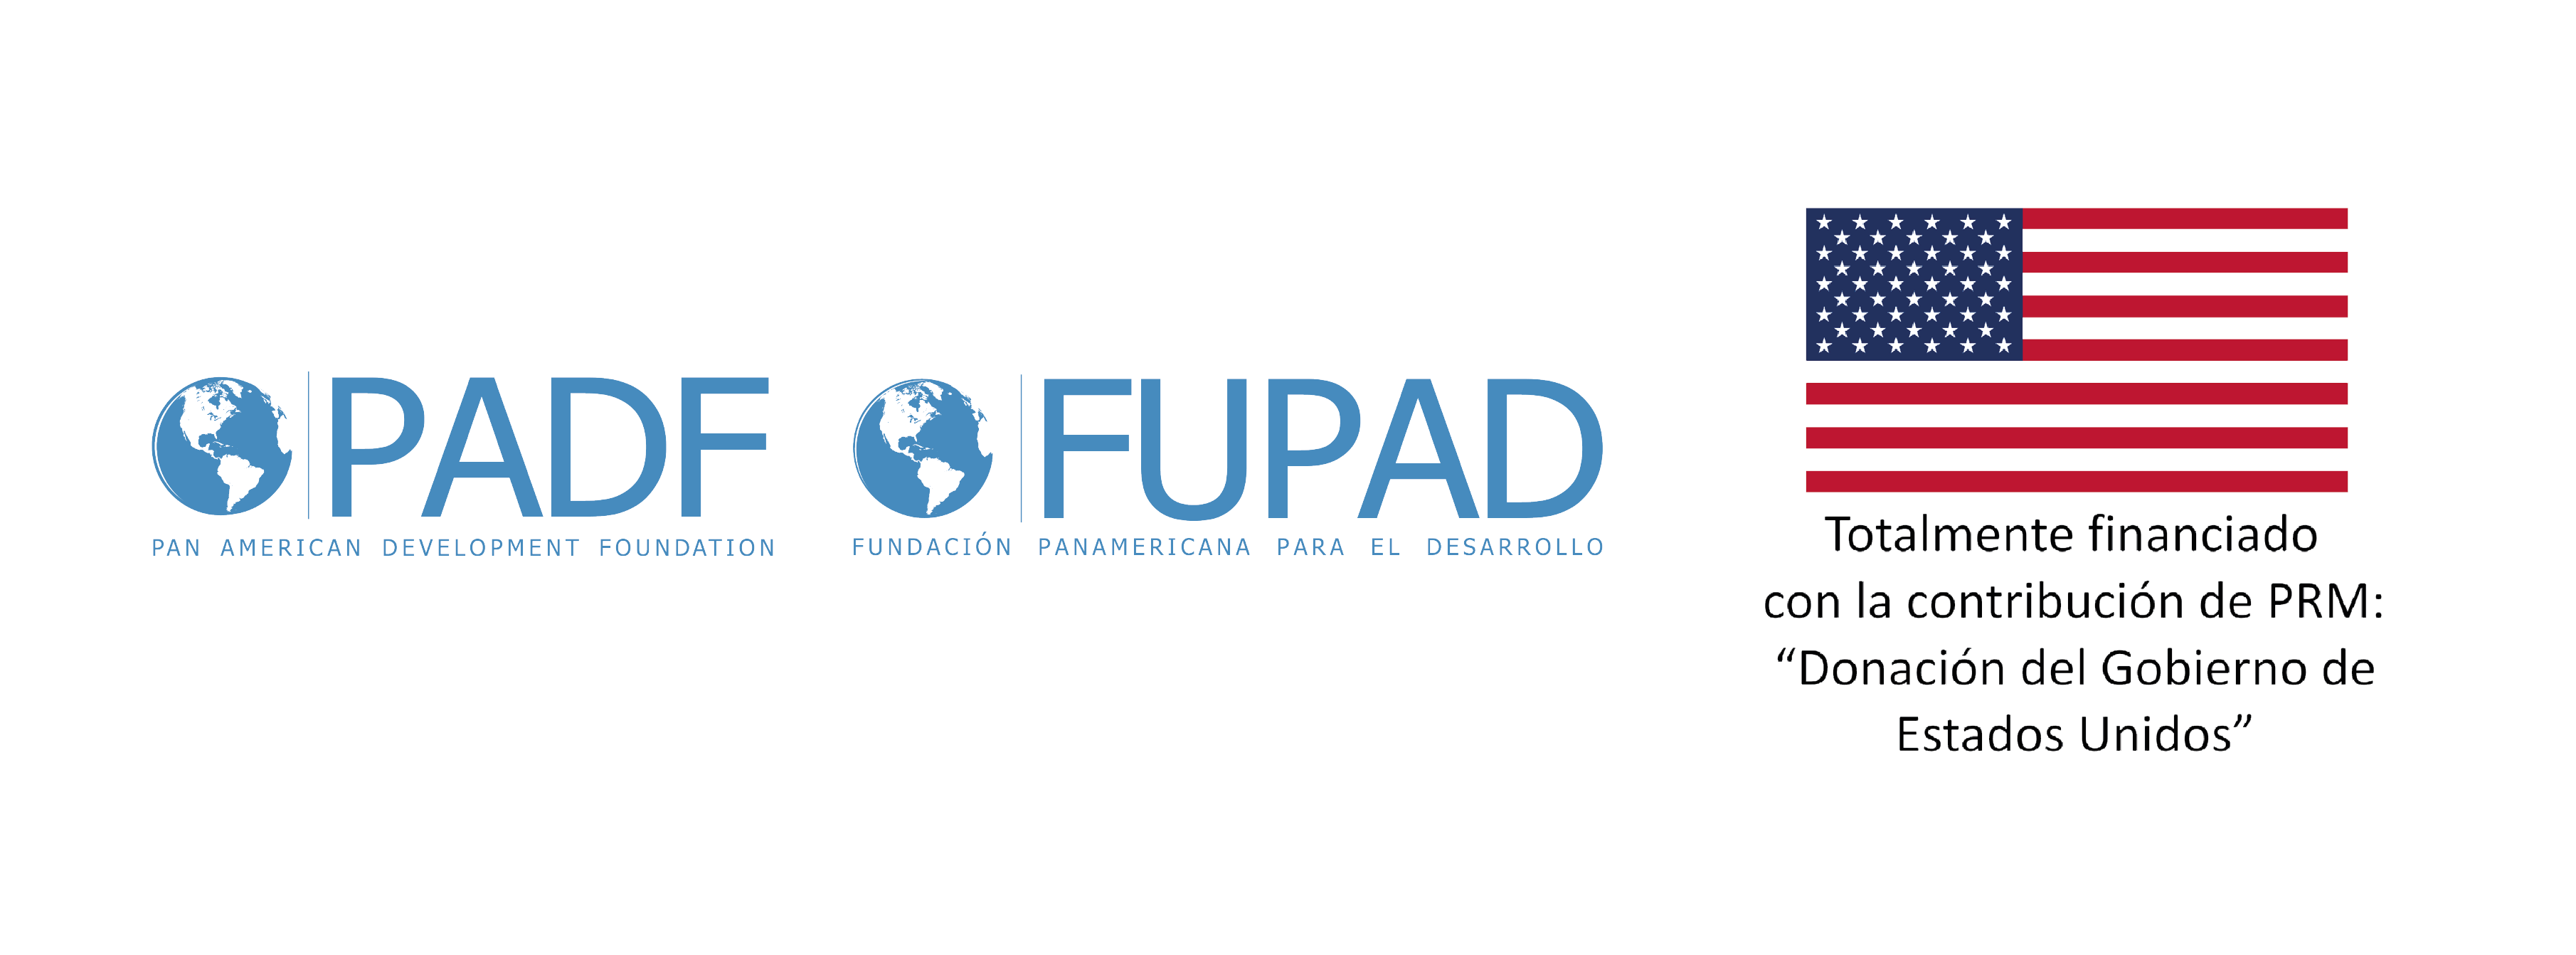 Logo FUPAD PADF PRM